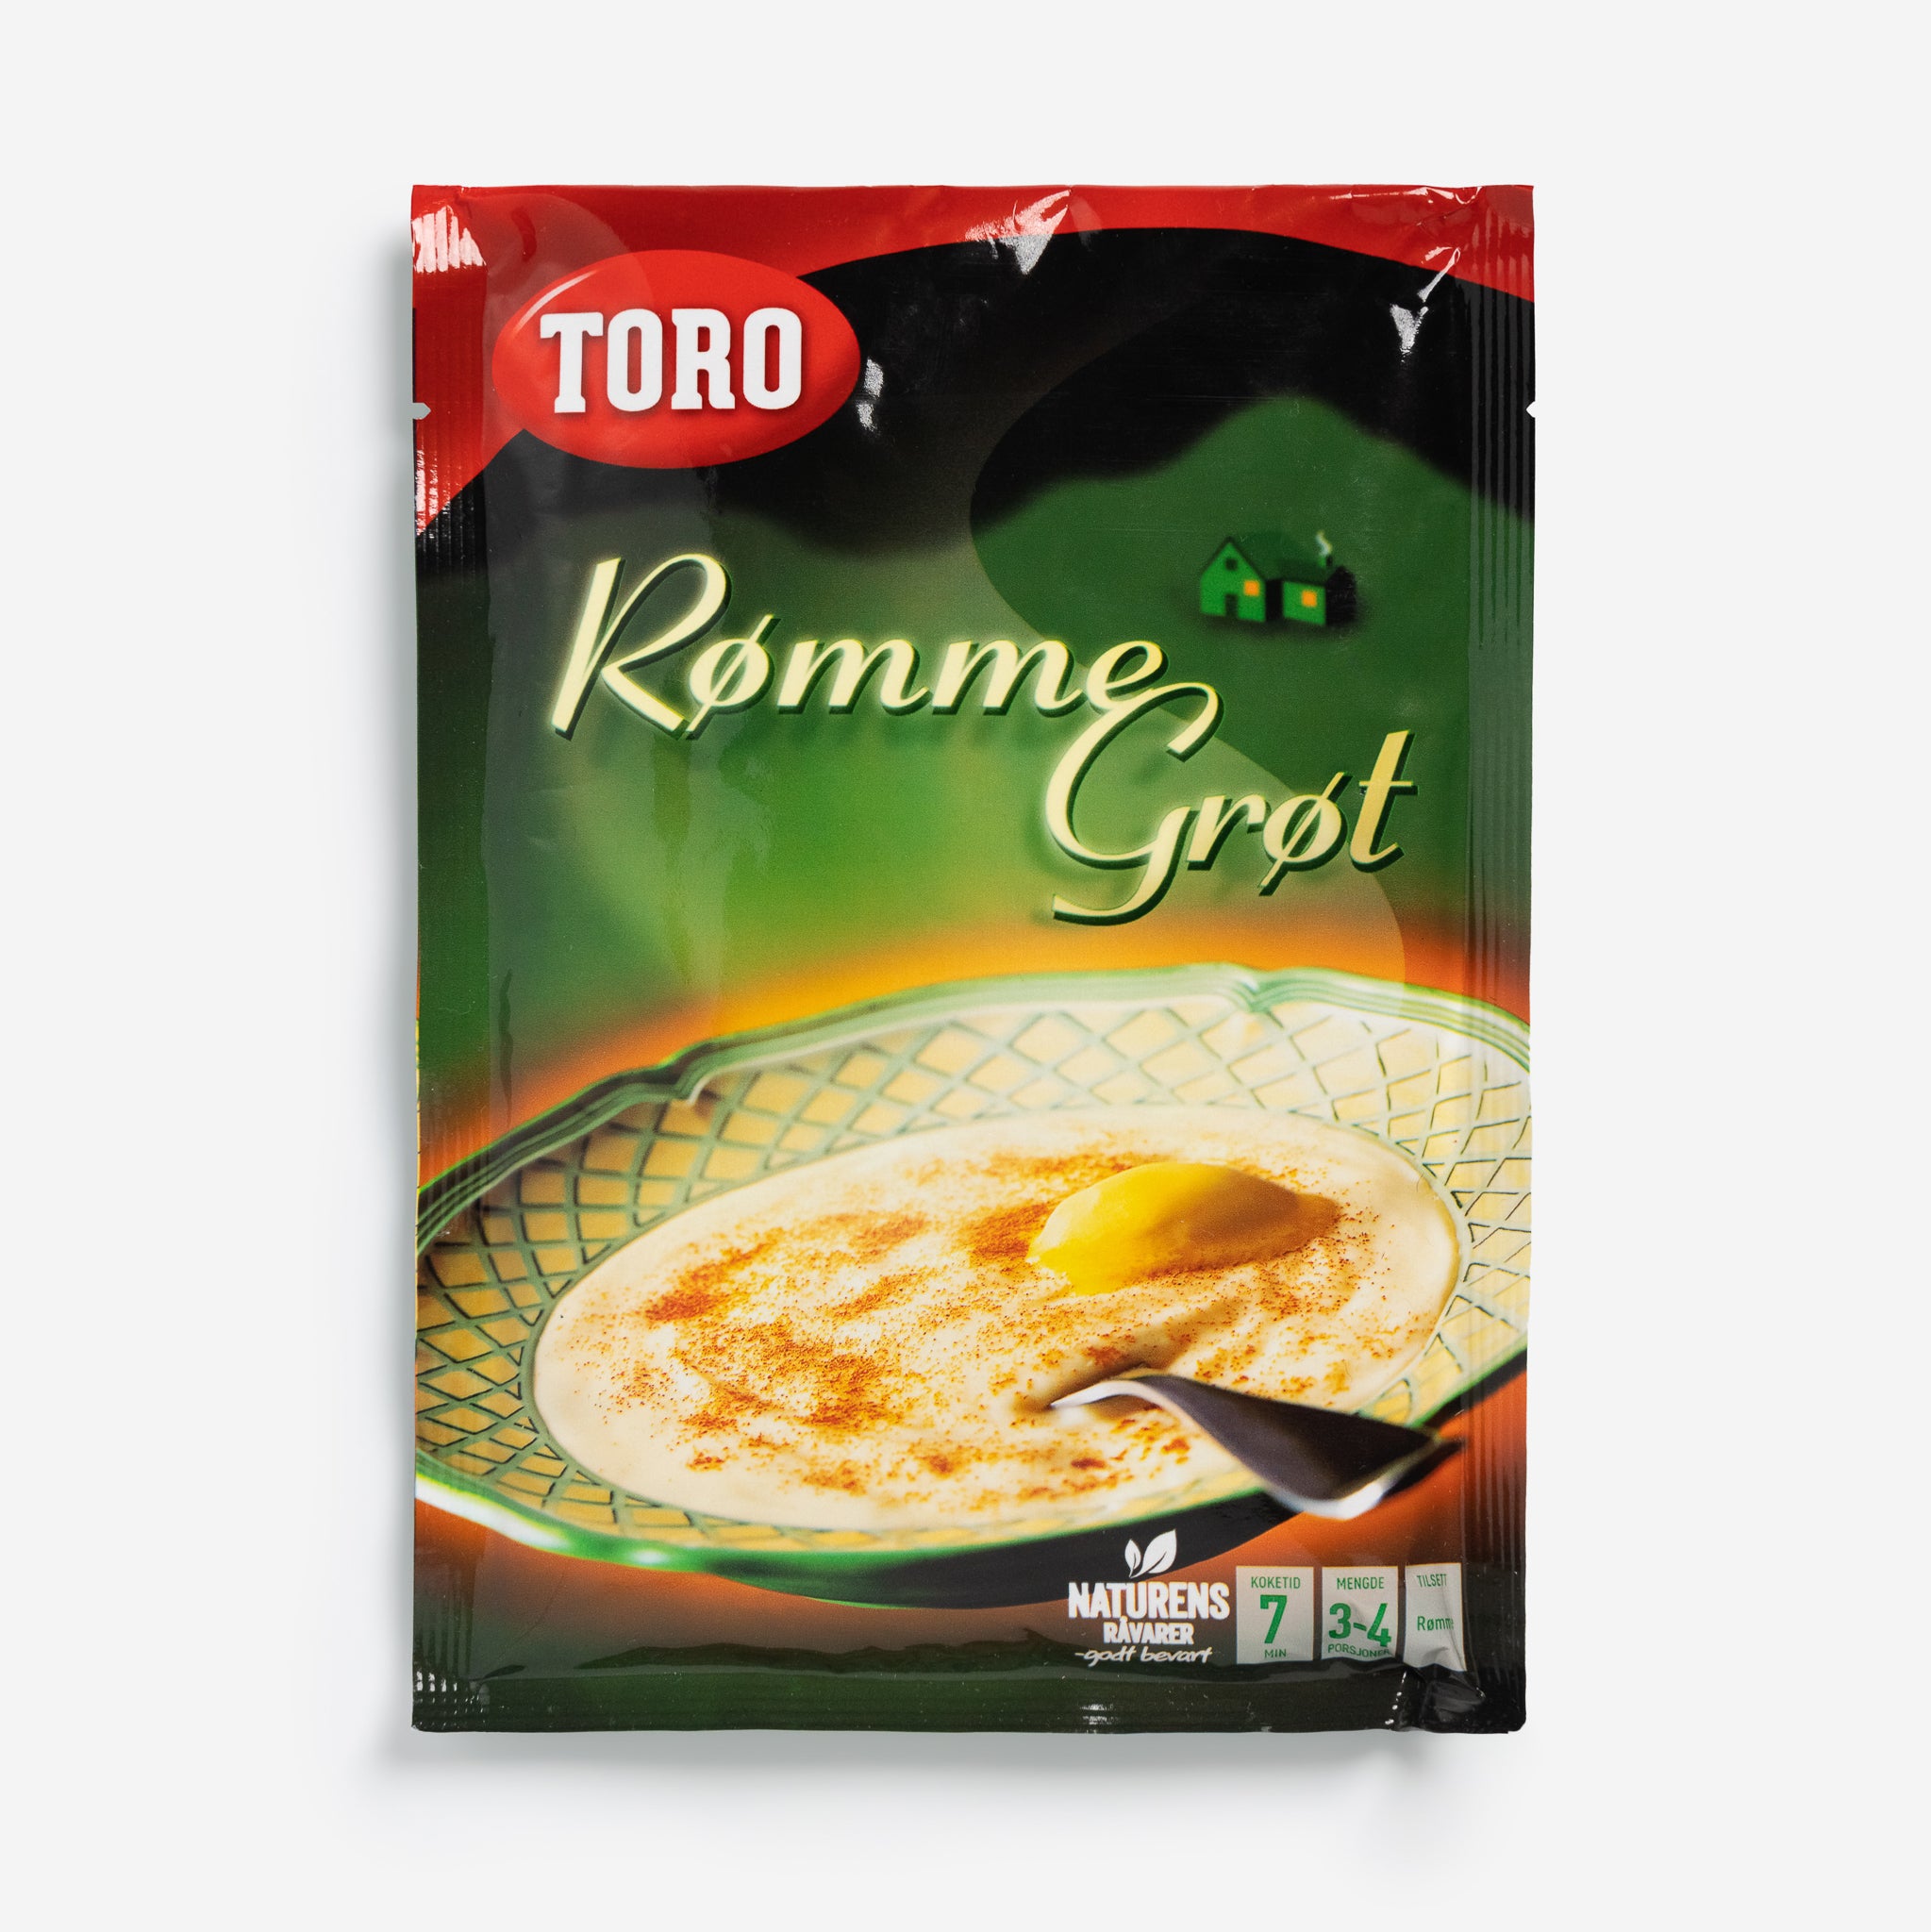 Rømmegrøt (Sour Cream Porridge) - Toro Mix